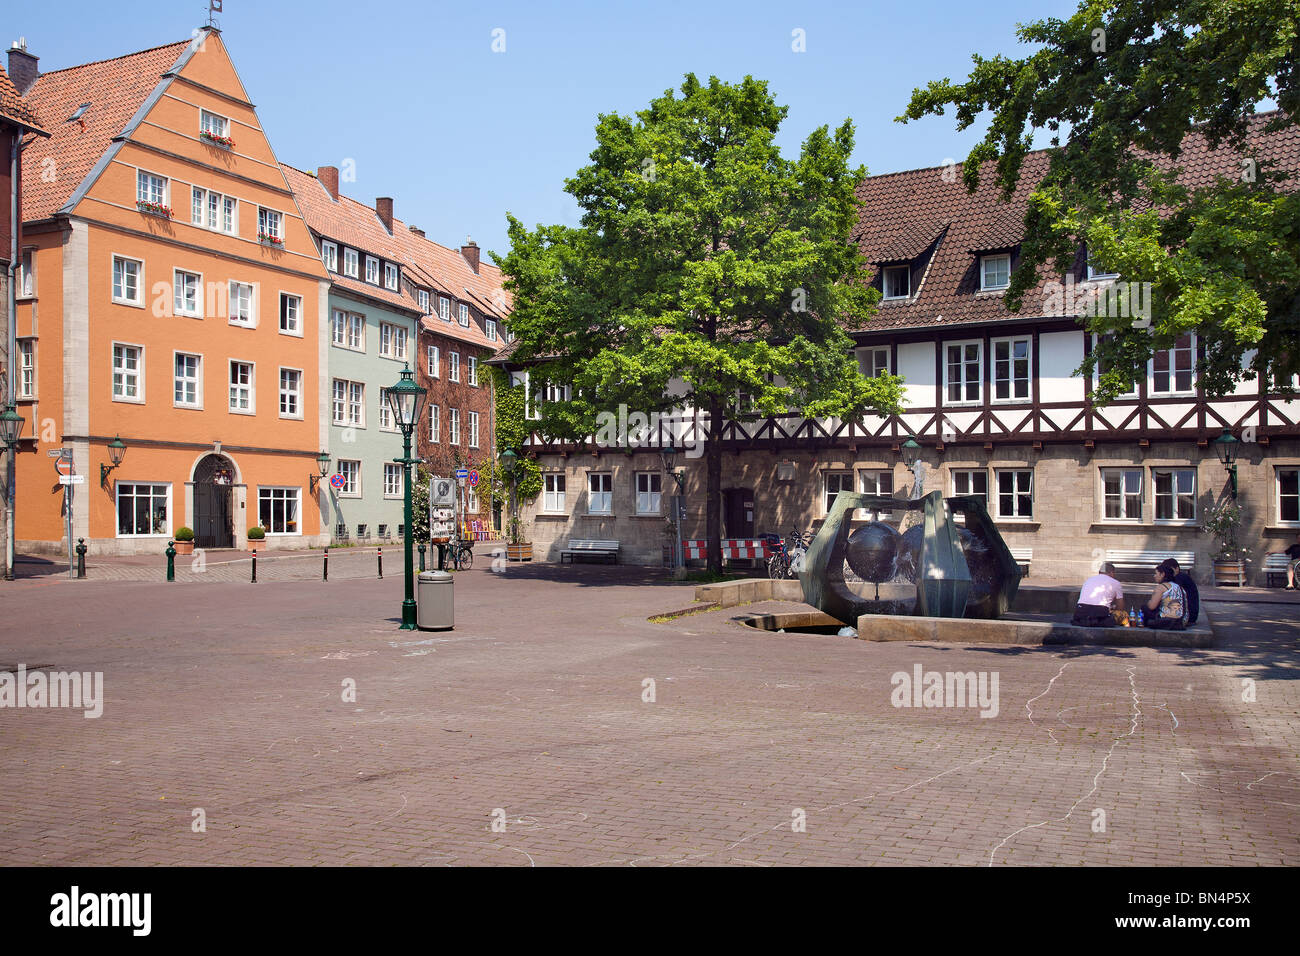 El Altstadt, Ballhof, Hannover, Baja Sajonia, Alemania Foto de stock